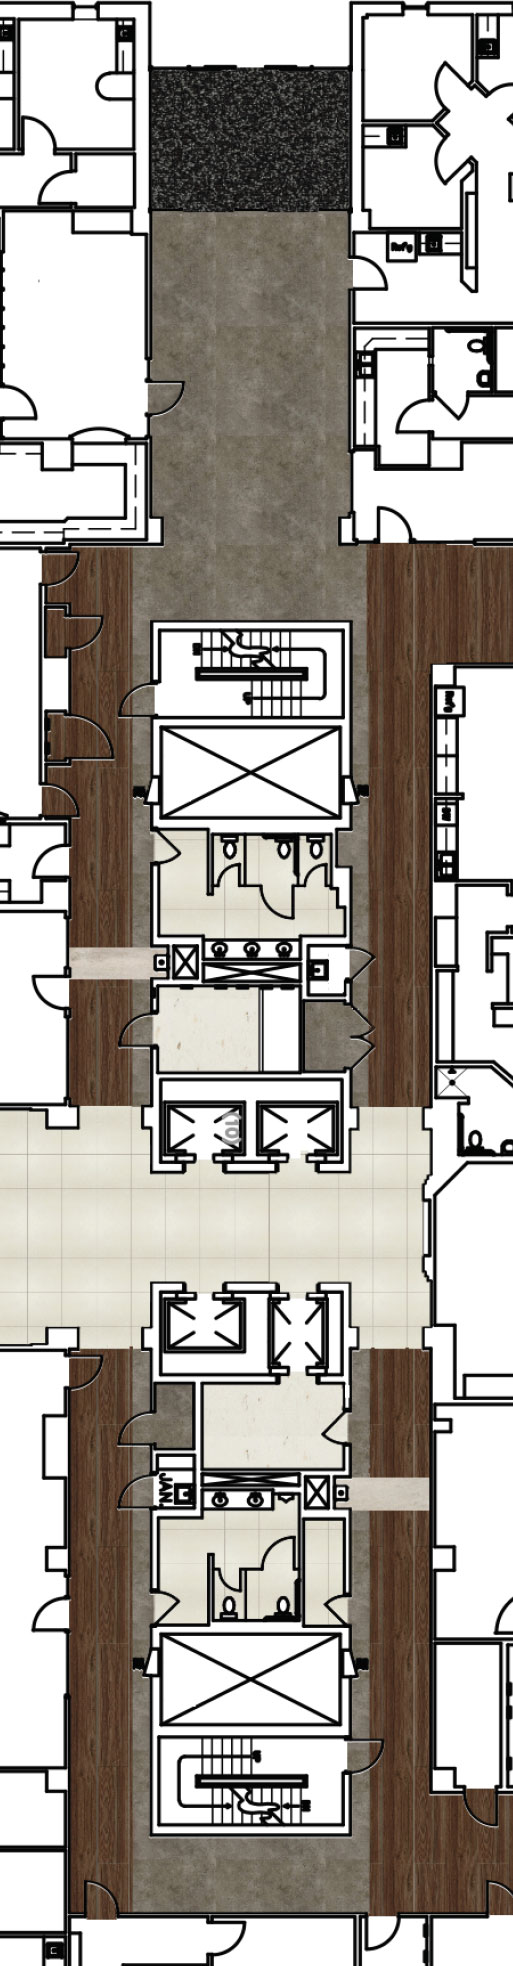 Medical Park Tower - Upgrades Floor Map